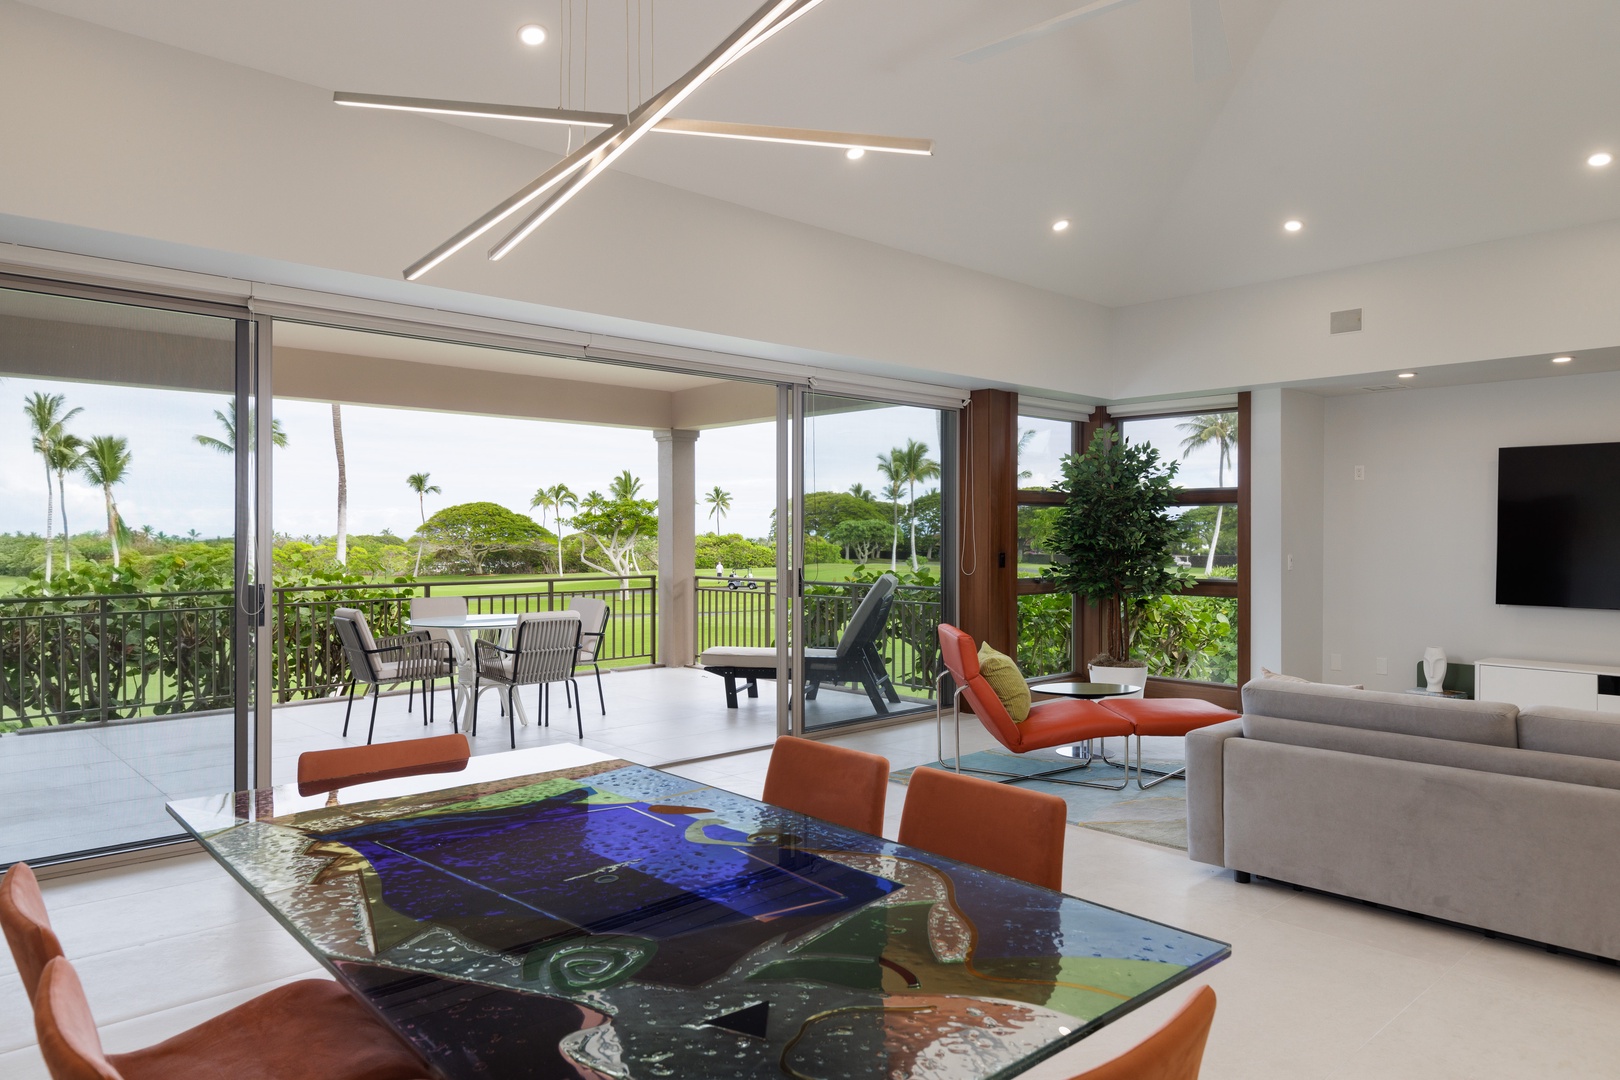 Kailua Kona Vacation Rentals, Fairway Villa 104A - Enjoy indoor-outdoor living.